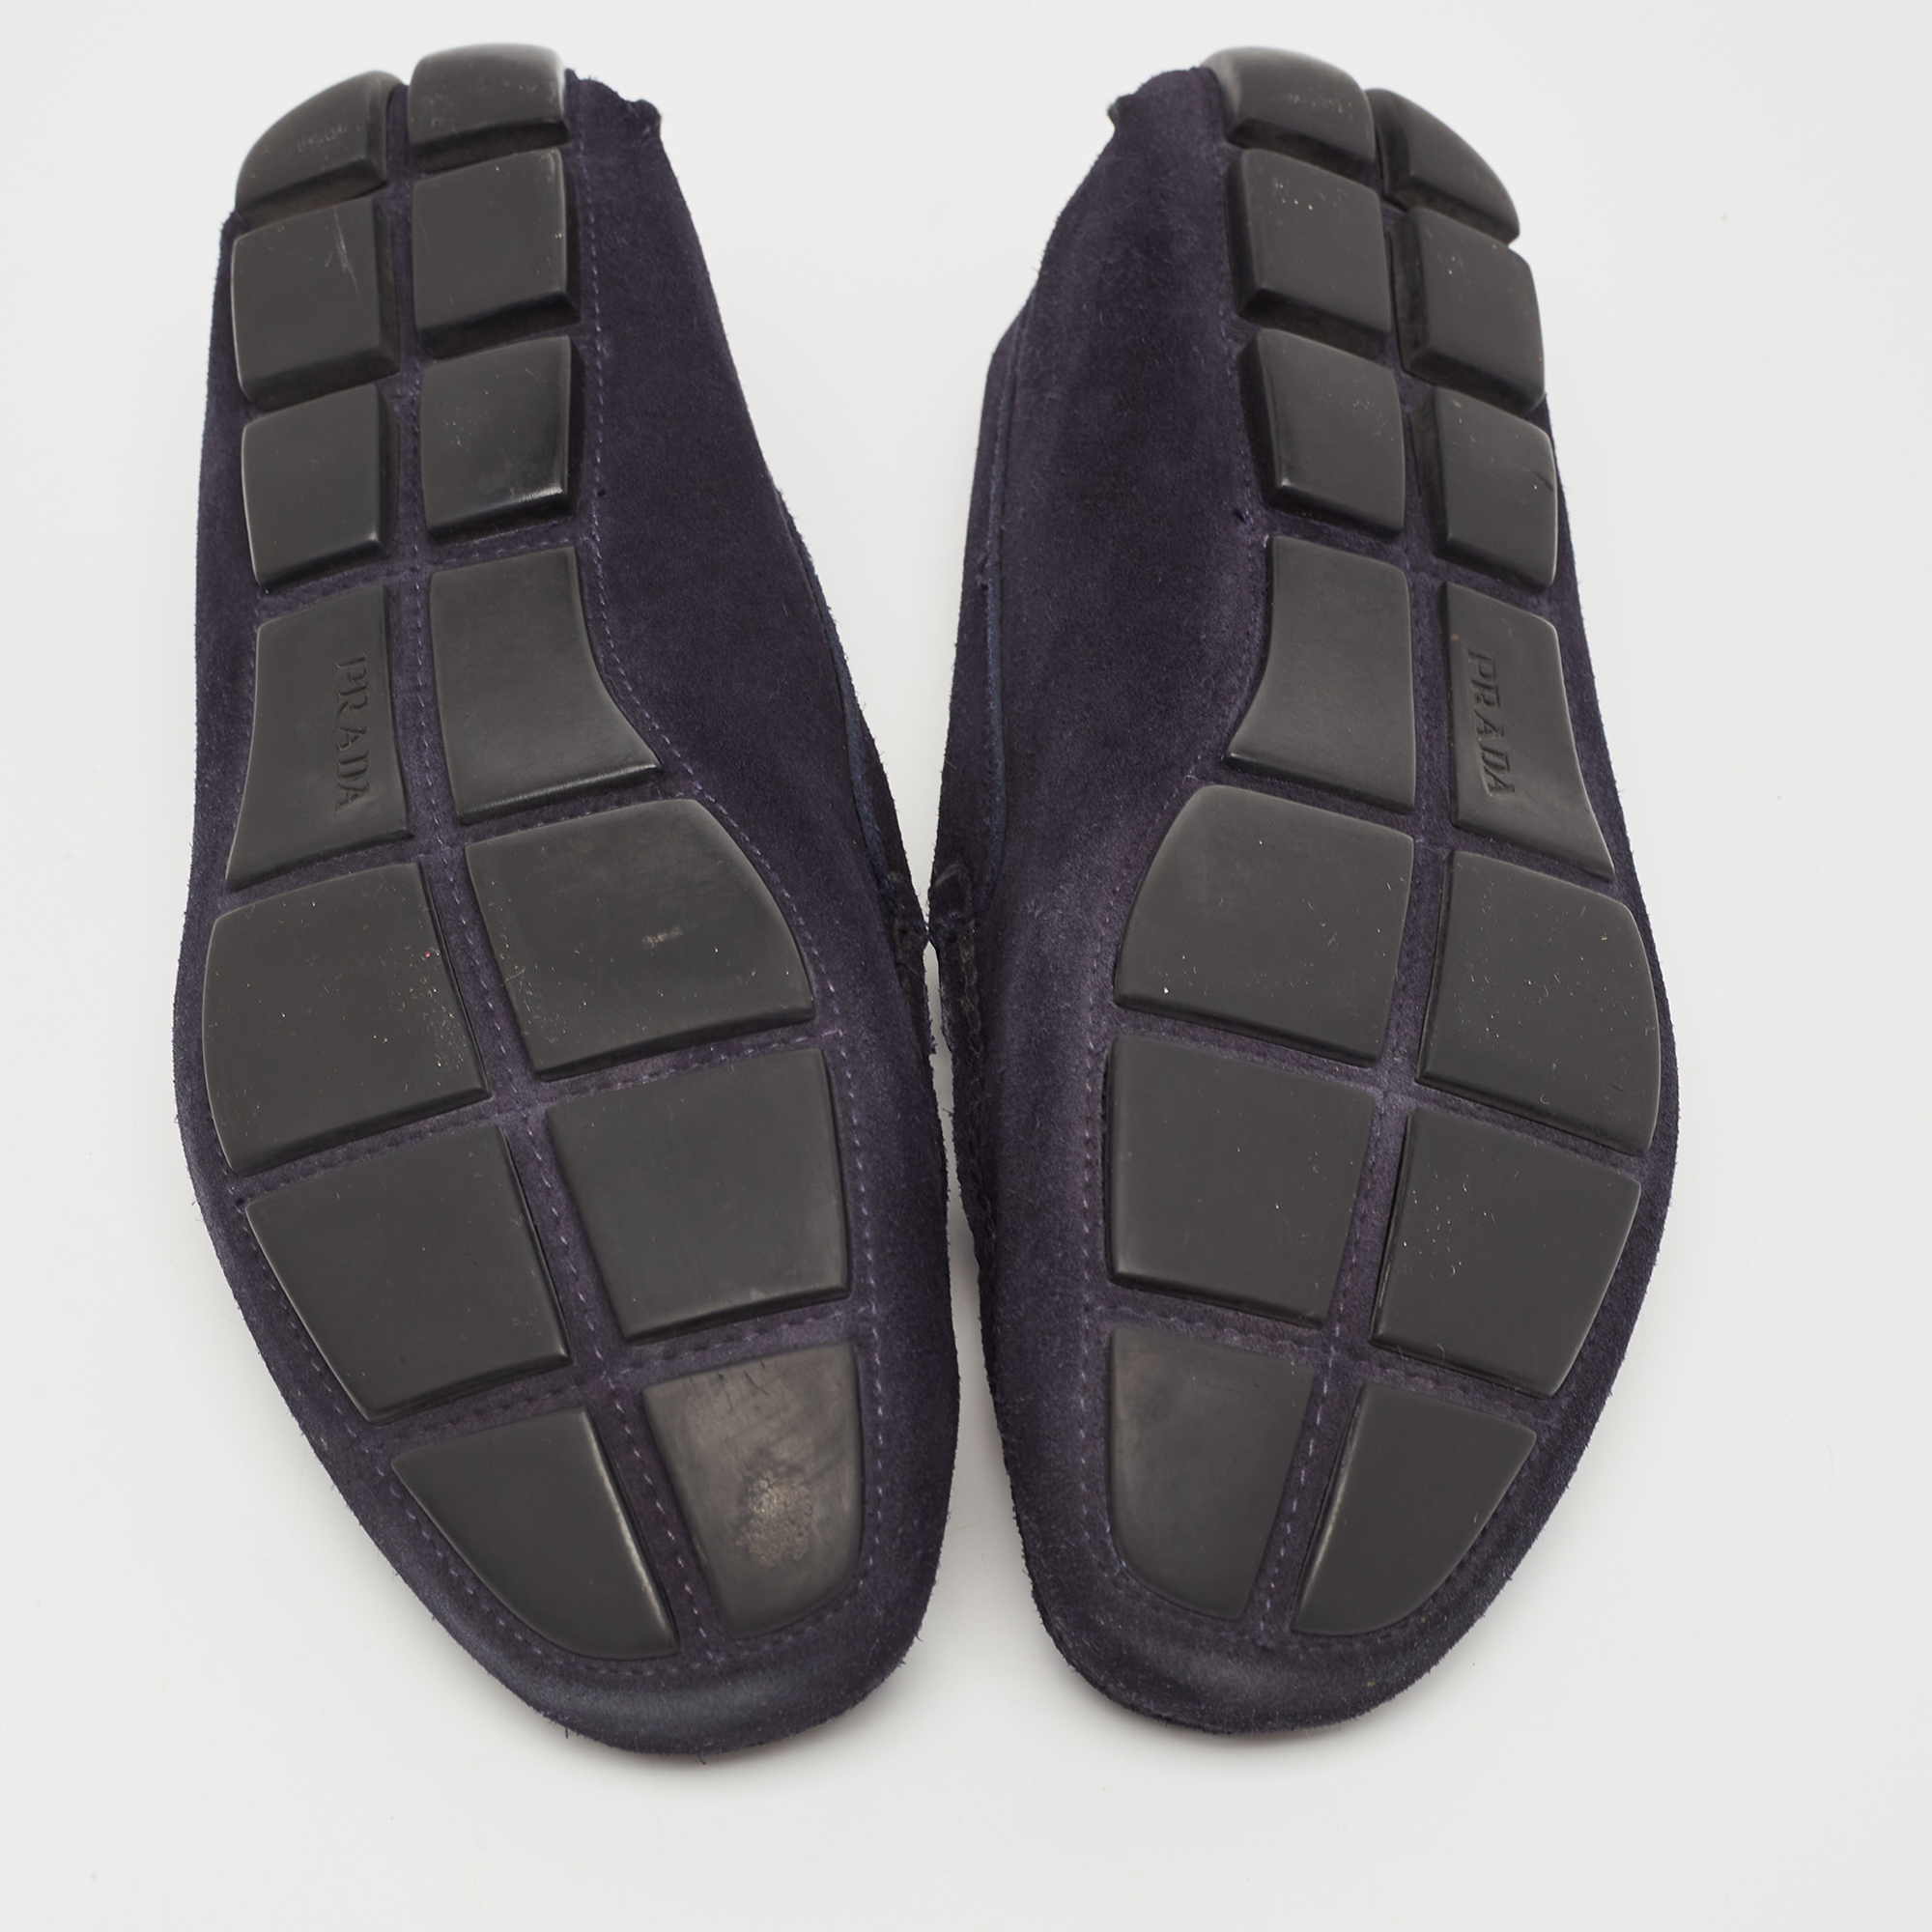 Prada Navy Blue Suede Slip On Loafers Size 41